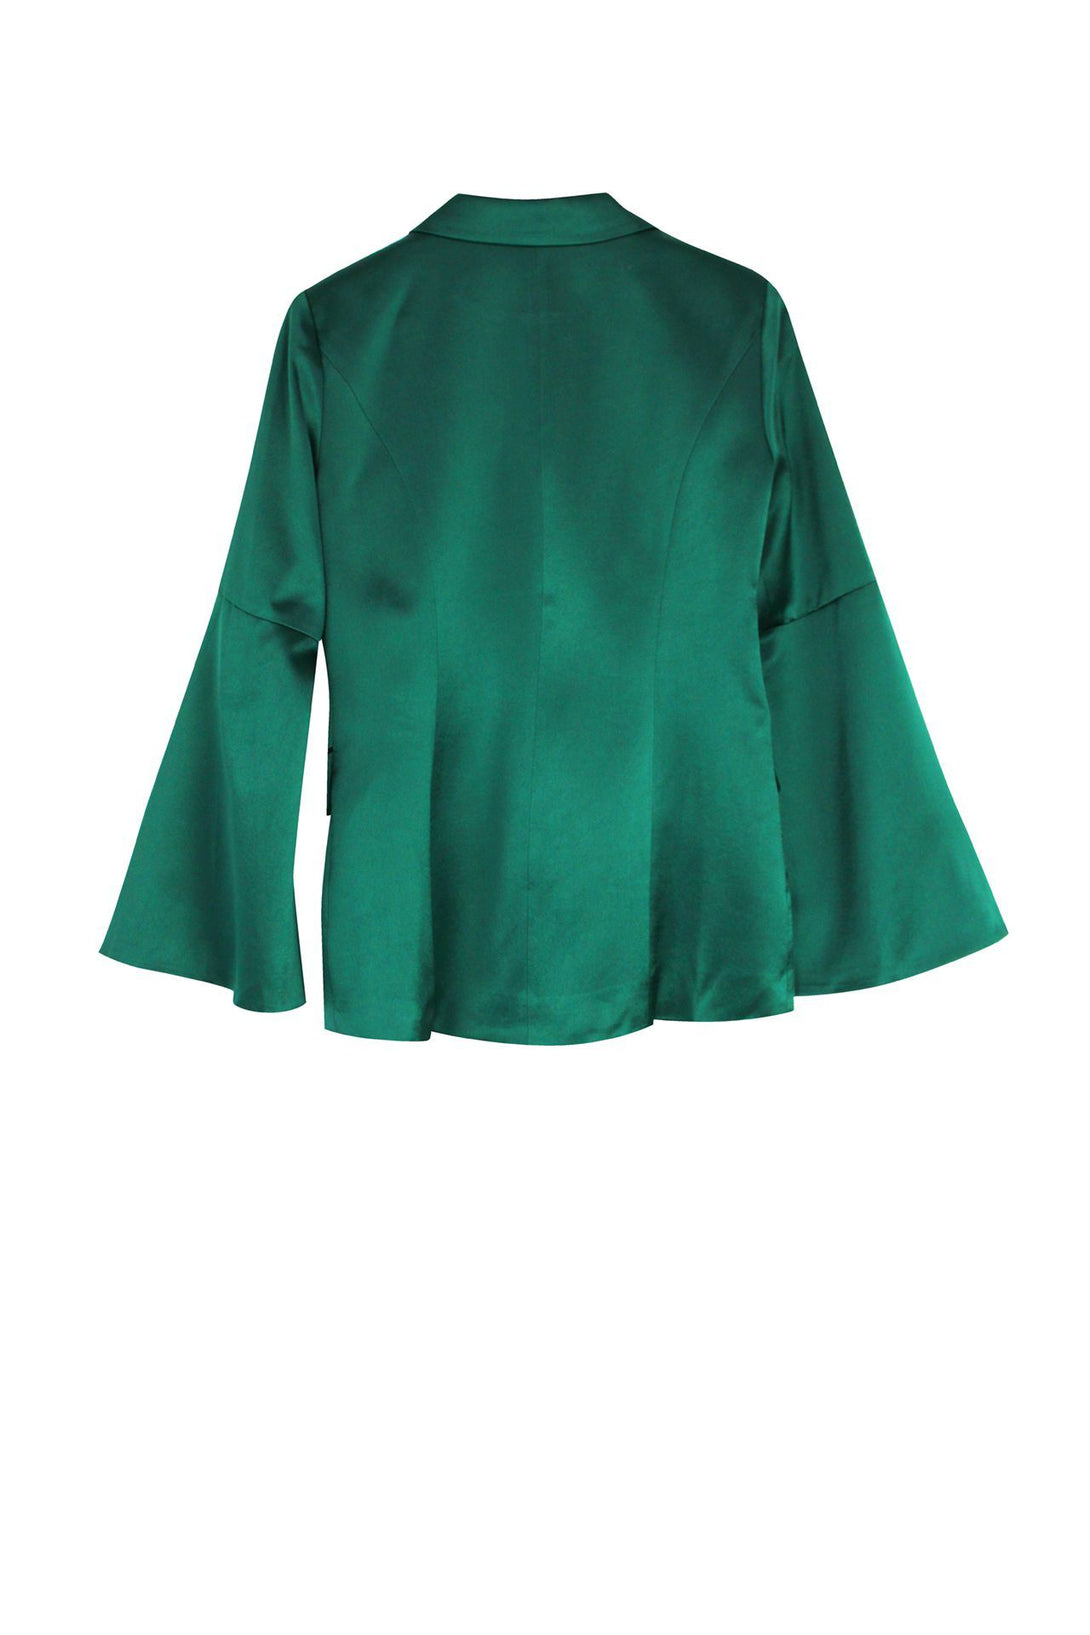 Green-Designer-Jacket-For-Women-By-Kyle-Richards